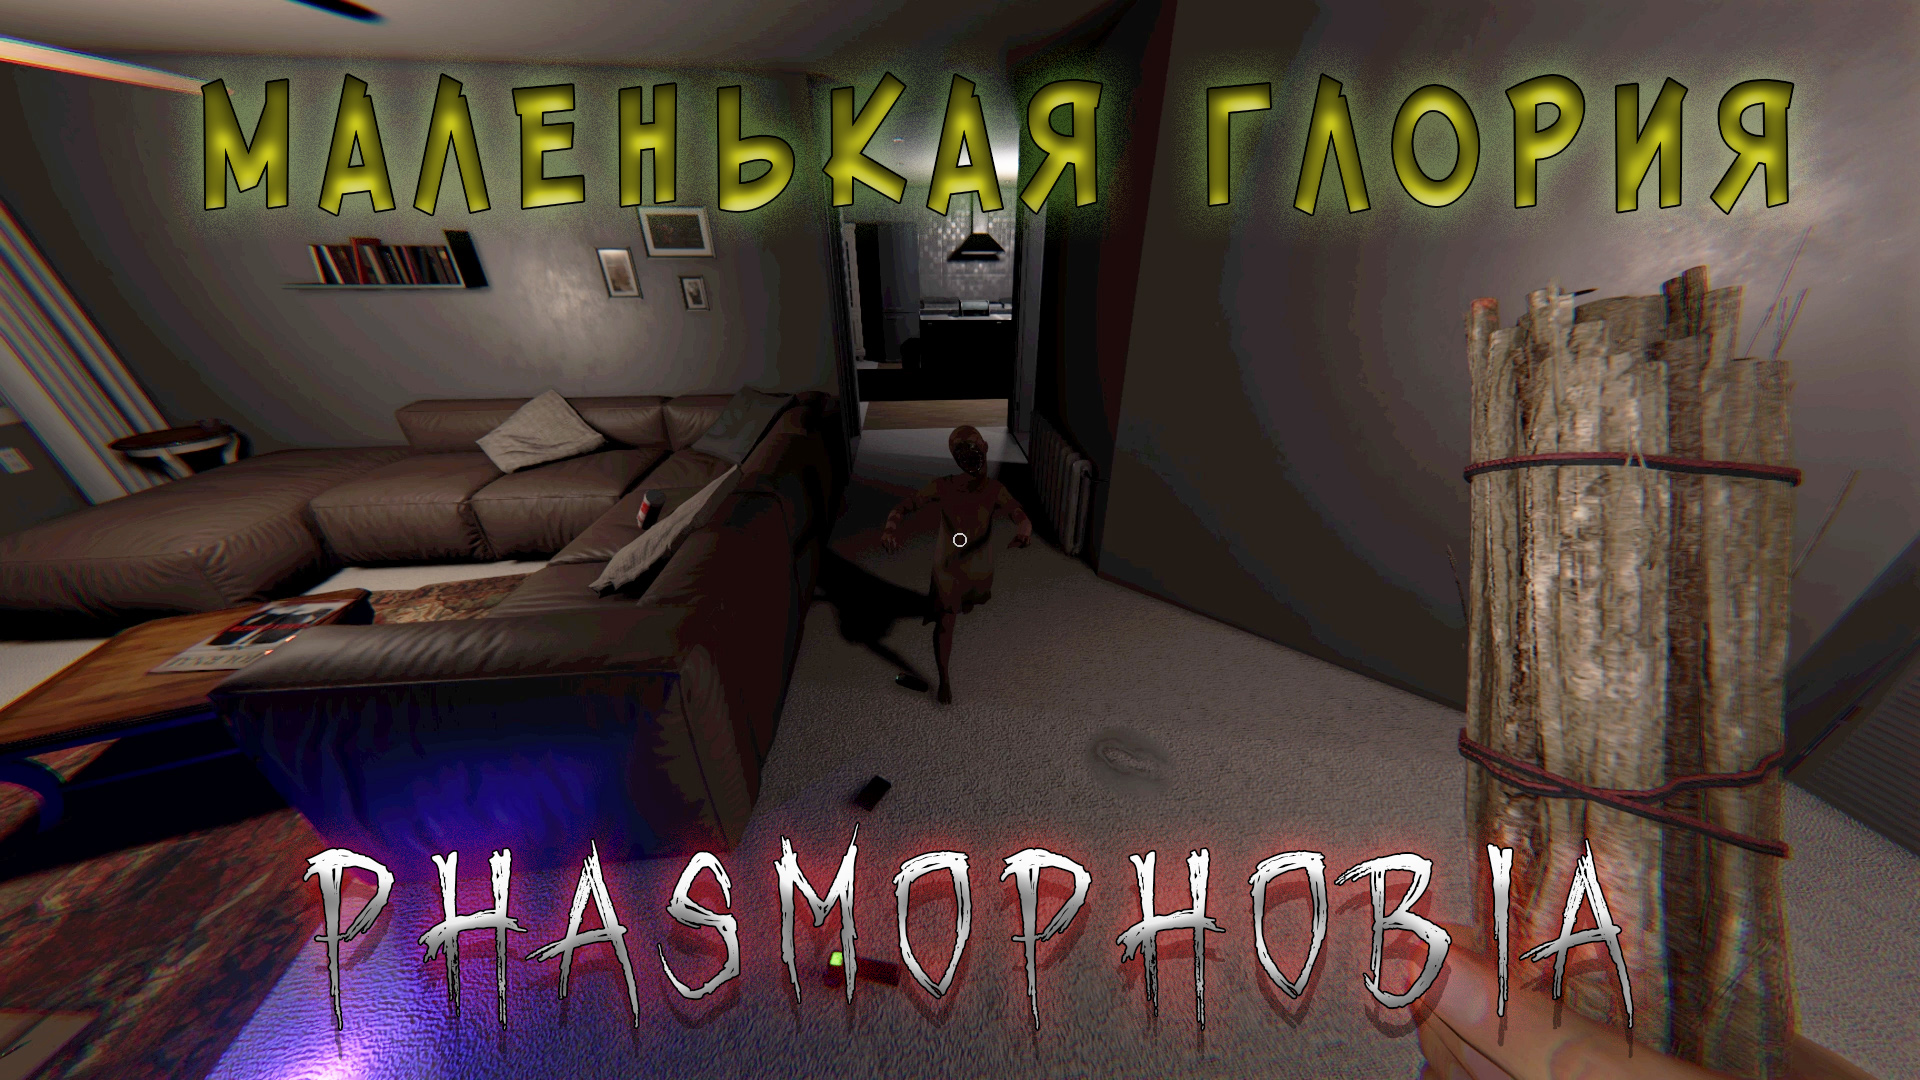 Phasmophobia лобби пасхалки фото 109